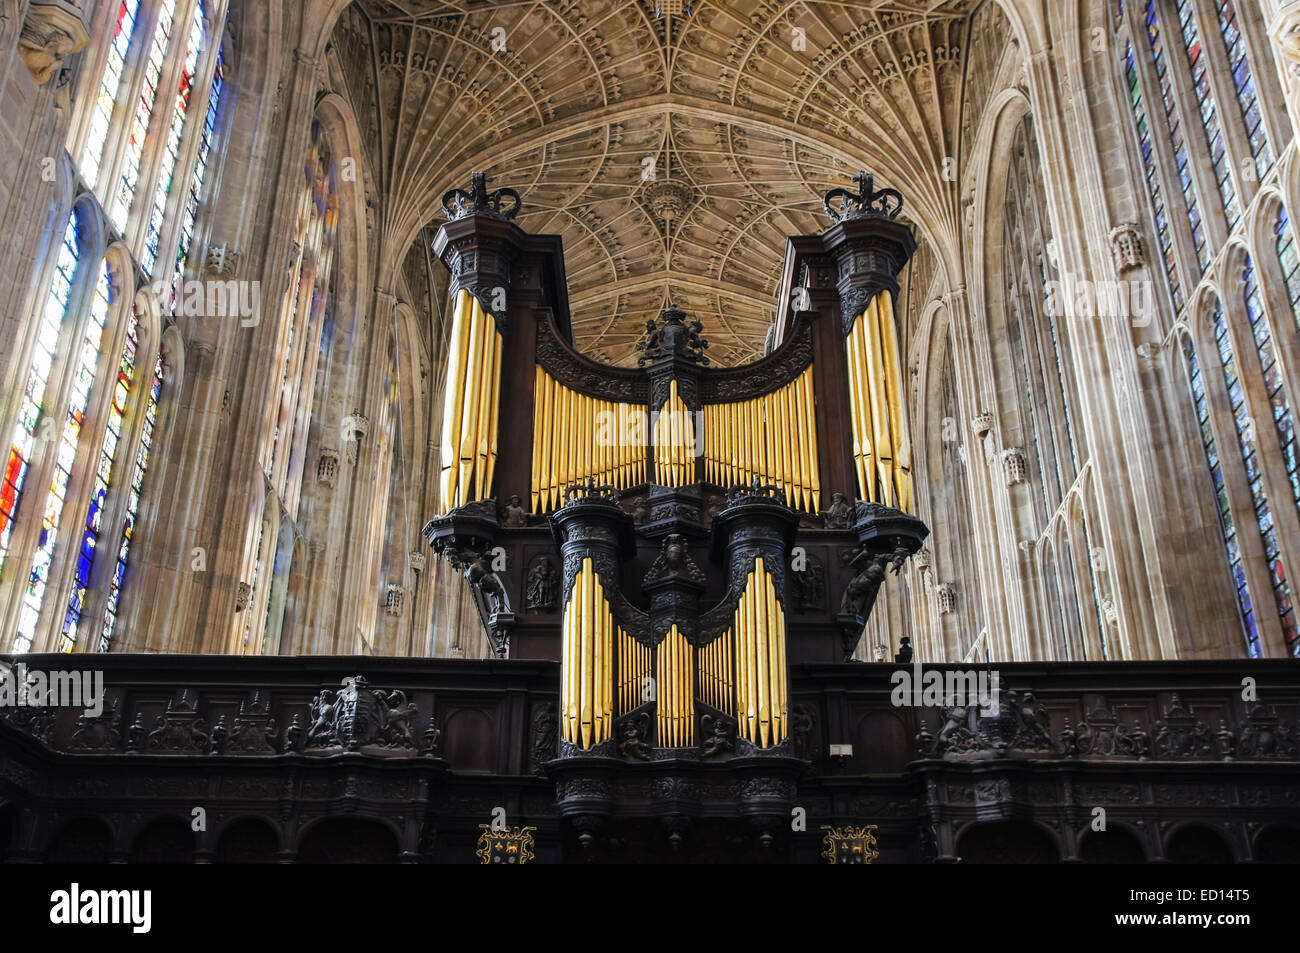 Pipe organ and interior of the King's College Chapel, Cambridge Cambridgeshire England United Kingdom UK Stock Photo